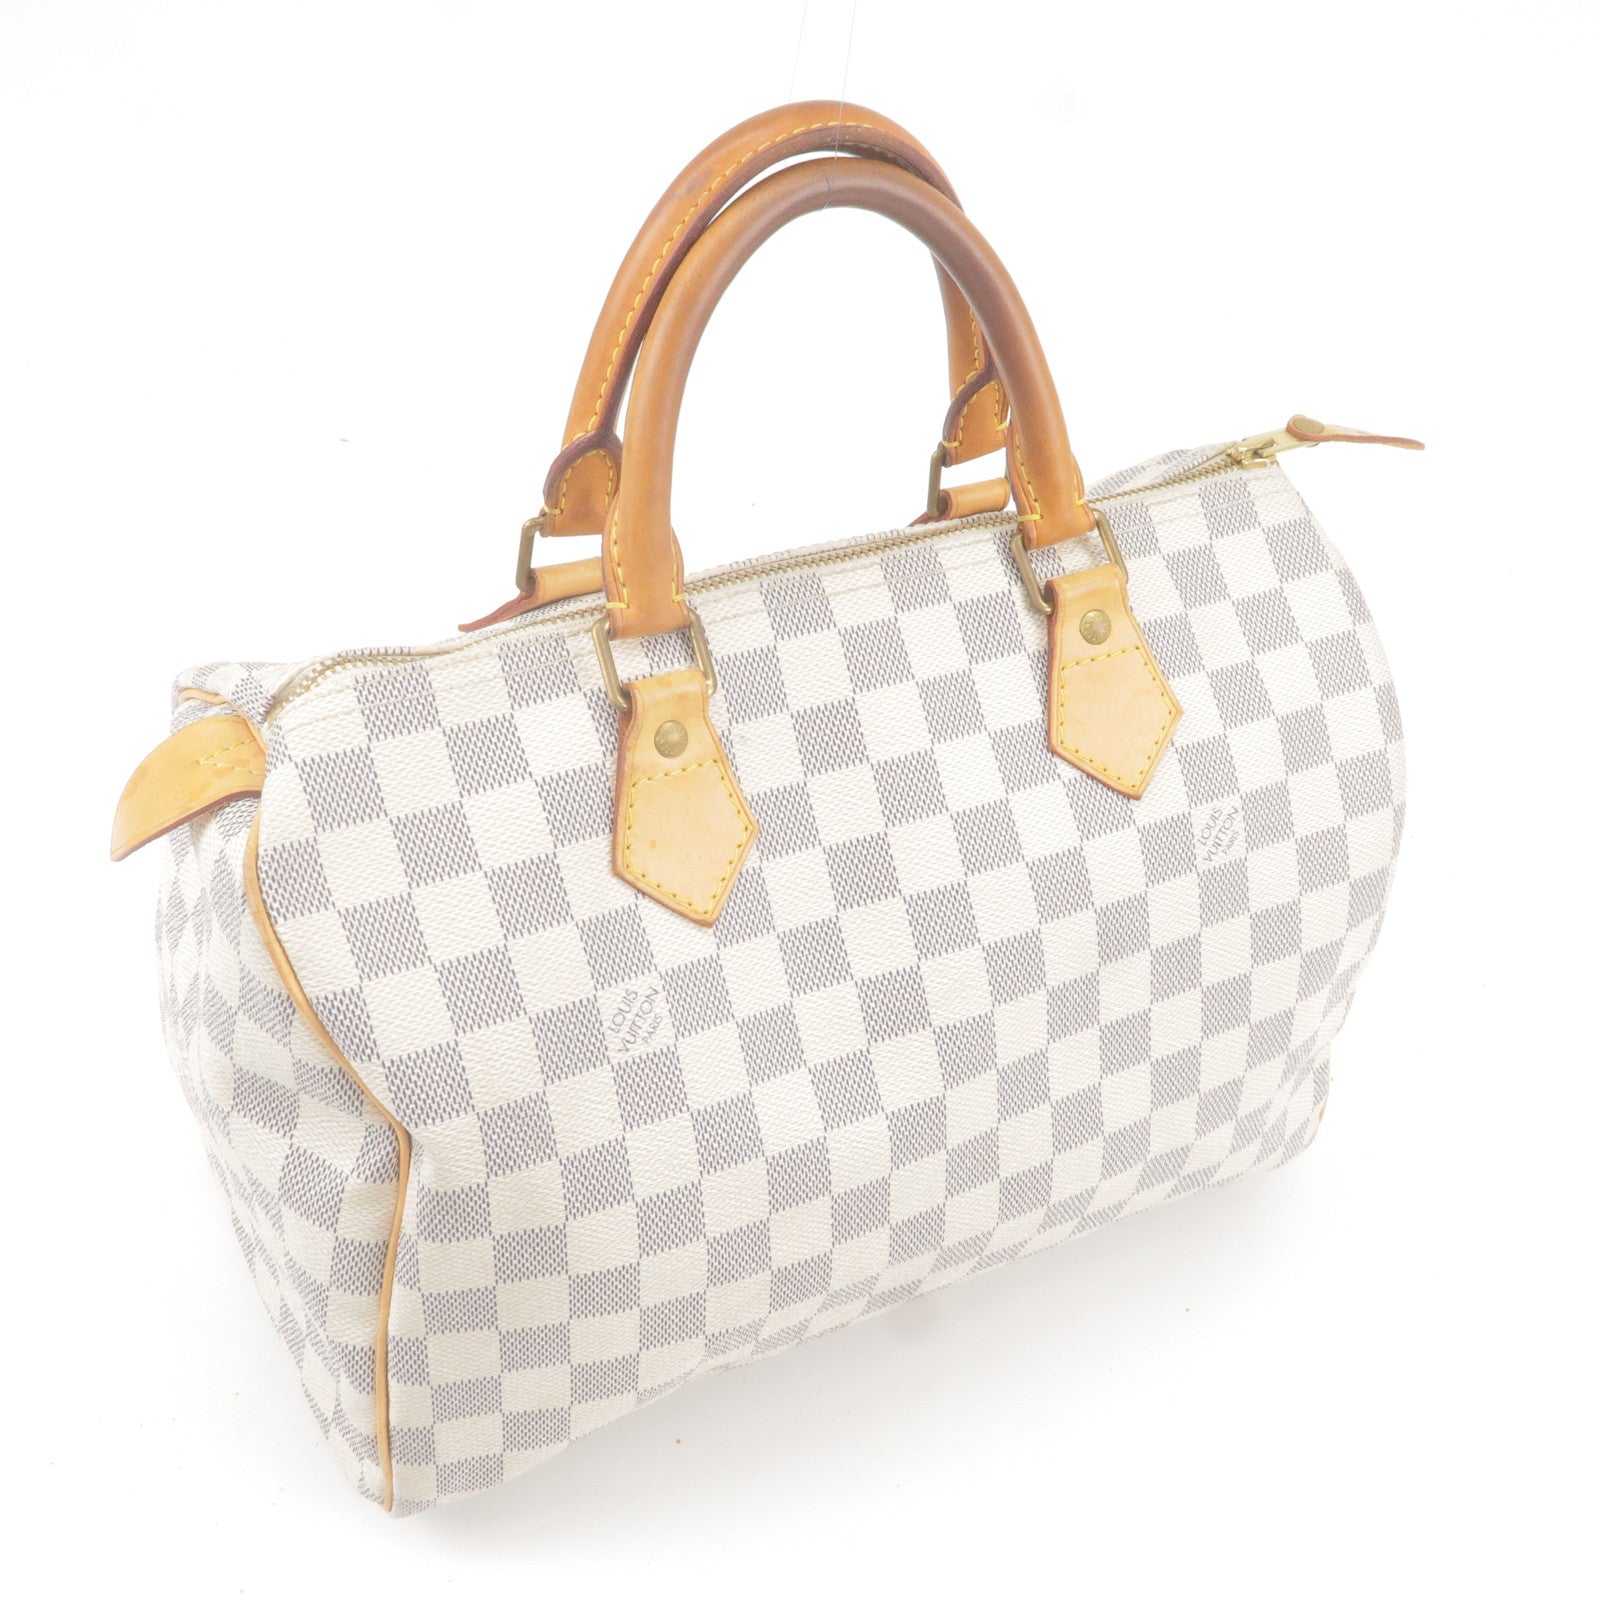 Louis Vuitton Speedy Shoulder bag 380947